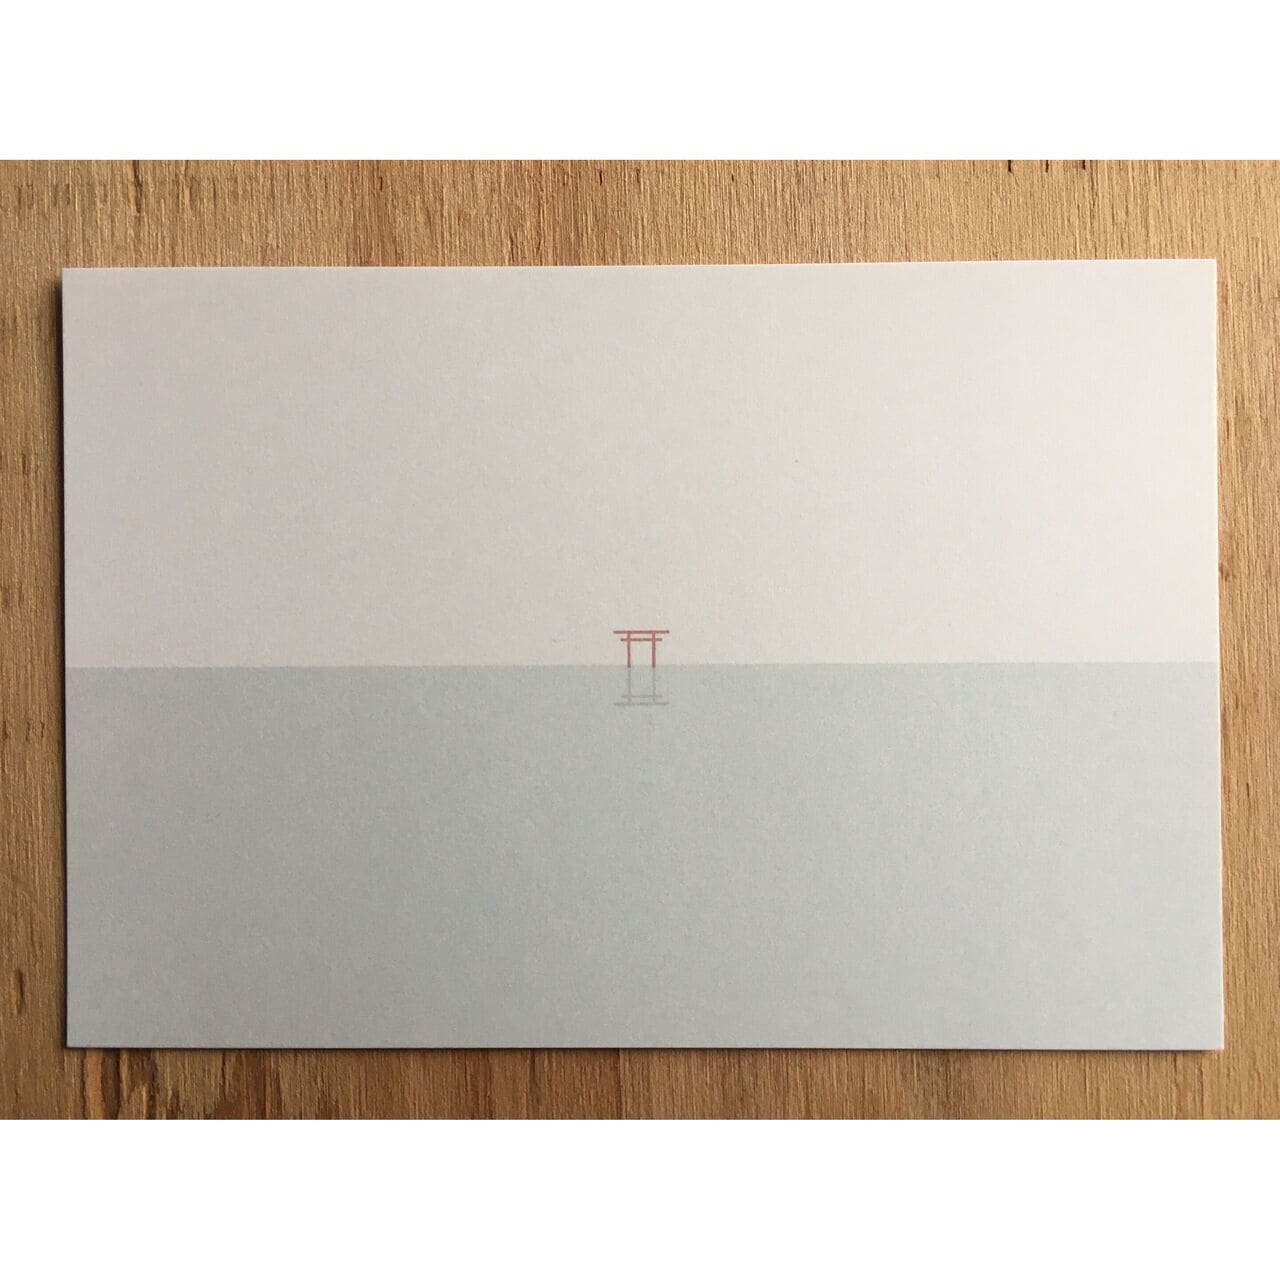 Symmetry 2 (Postcard Message Card)